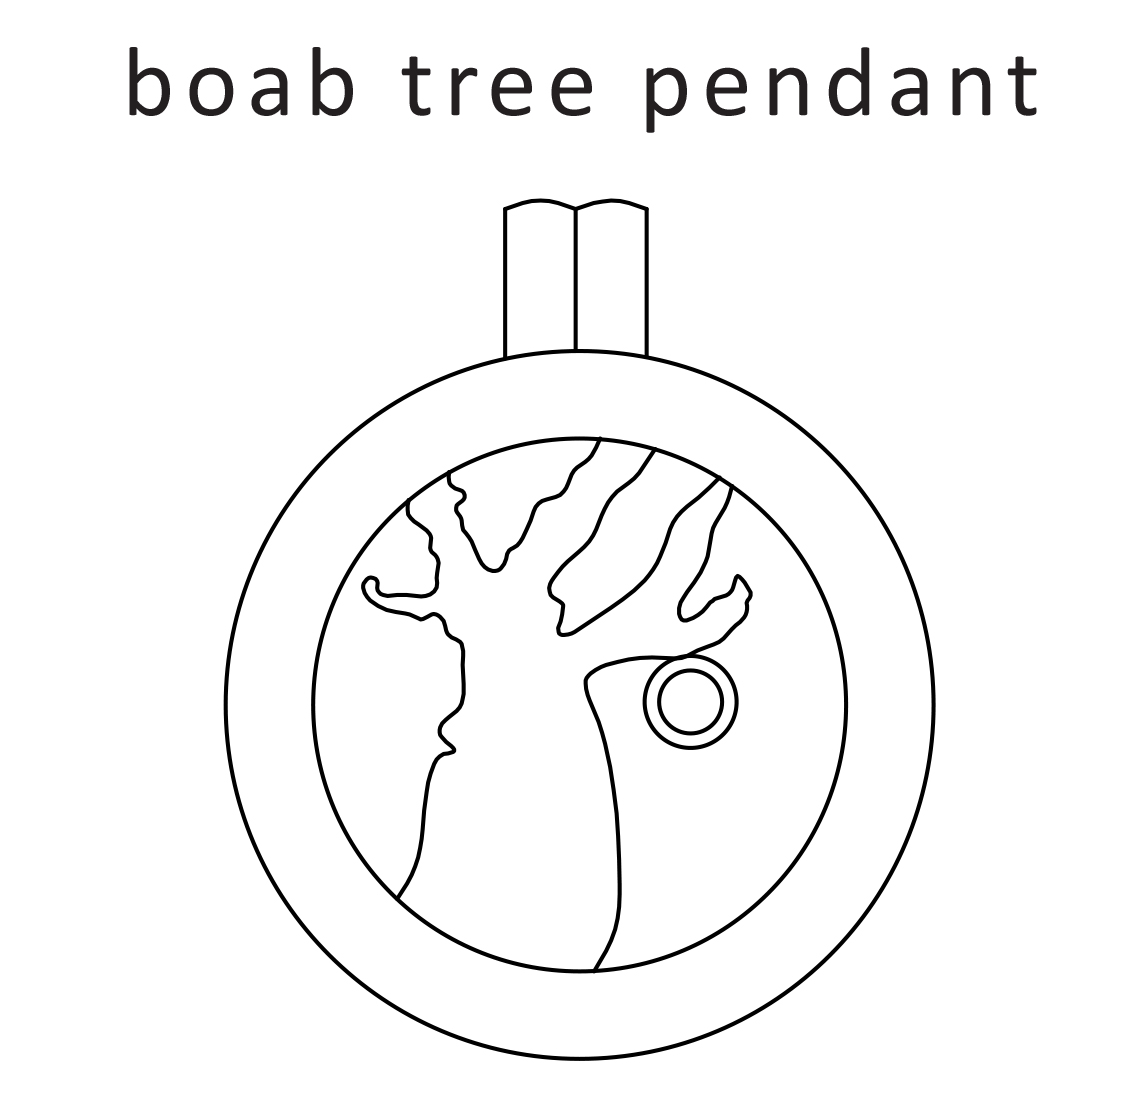 Boab Tree Pendant